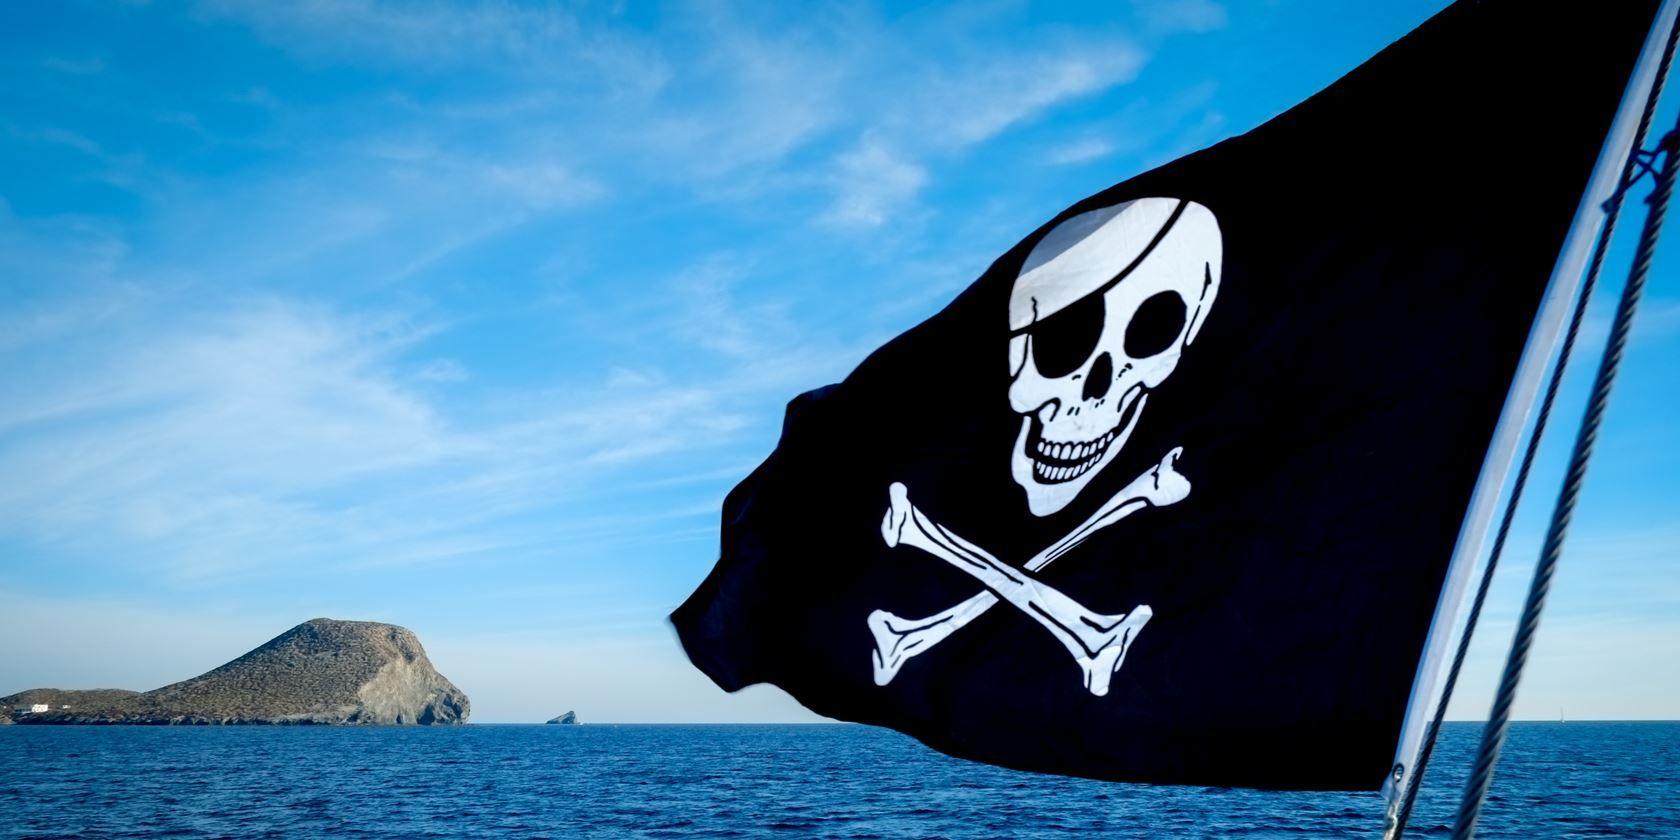 subnautica download torrent pirate bay